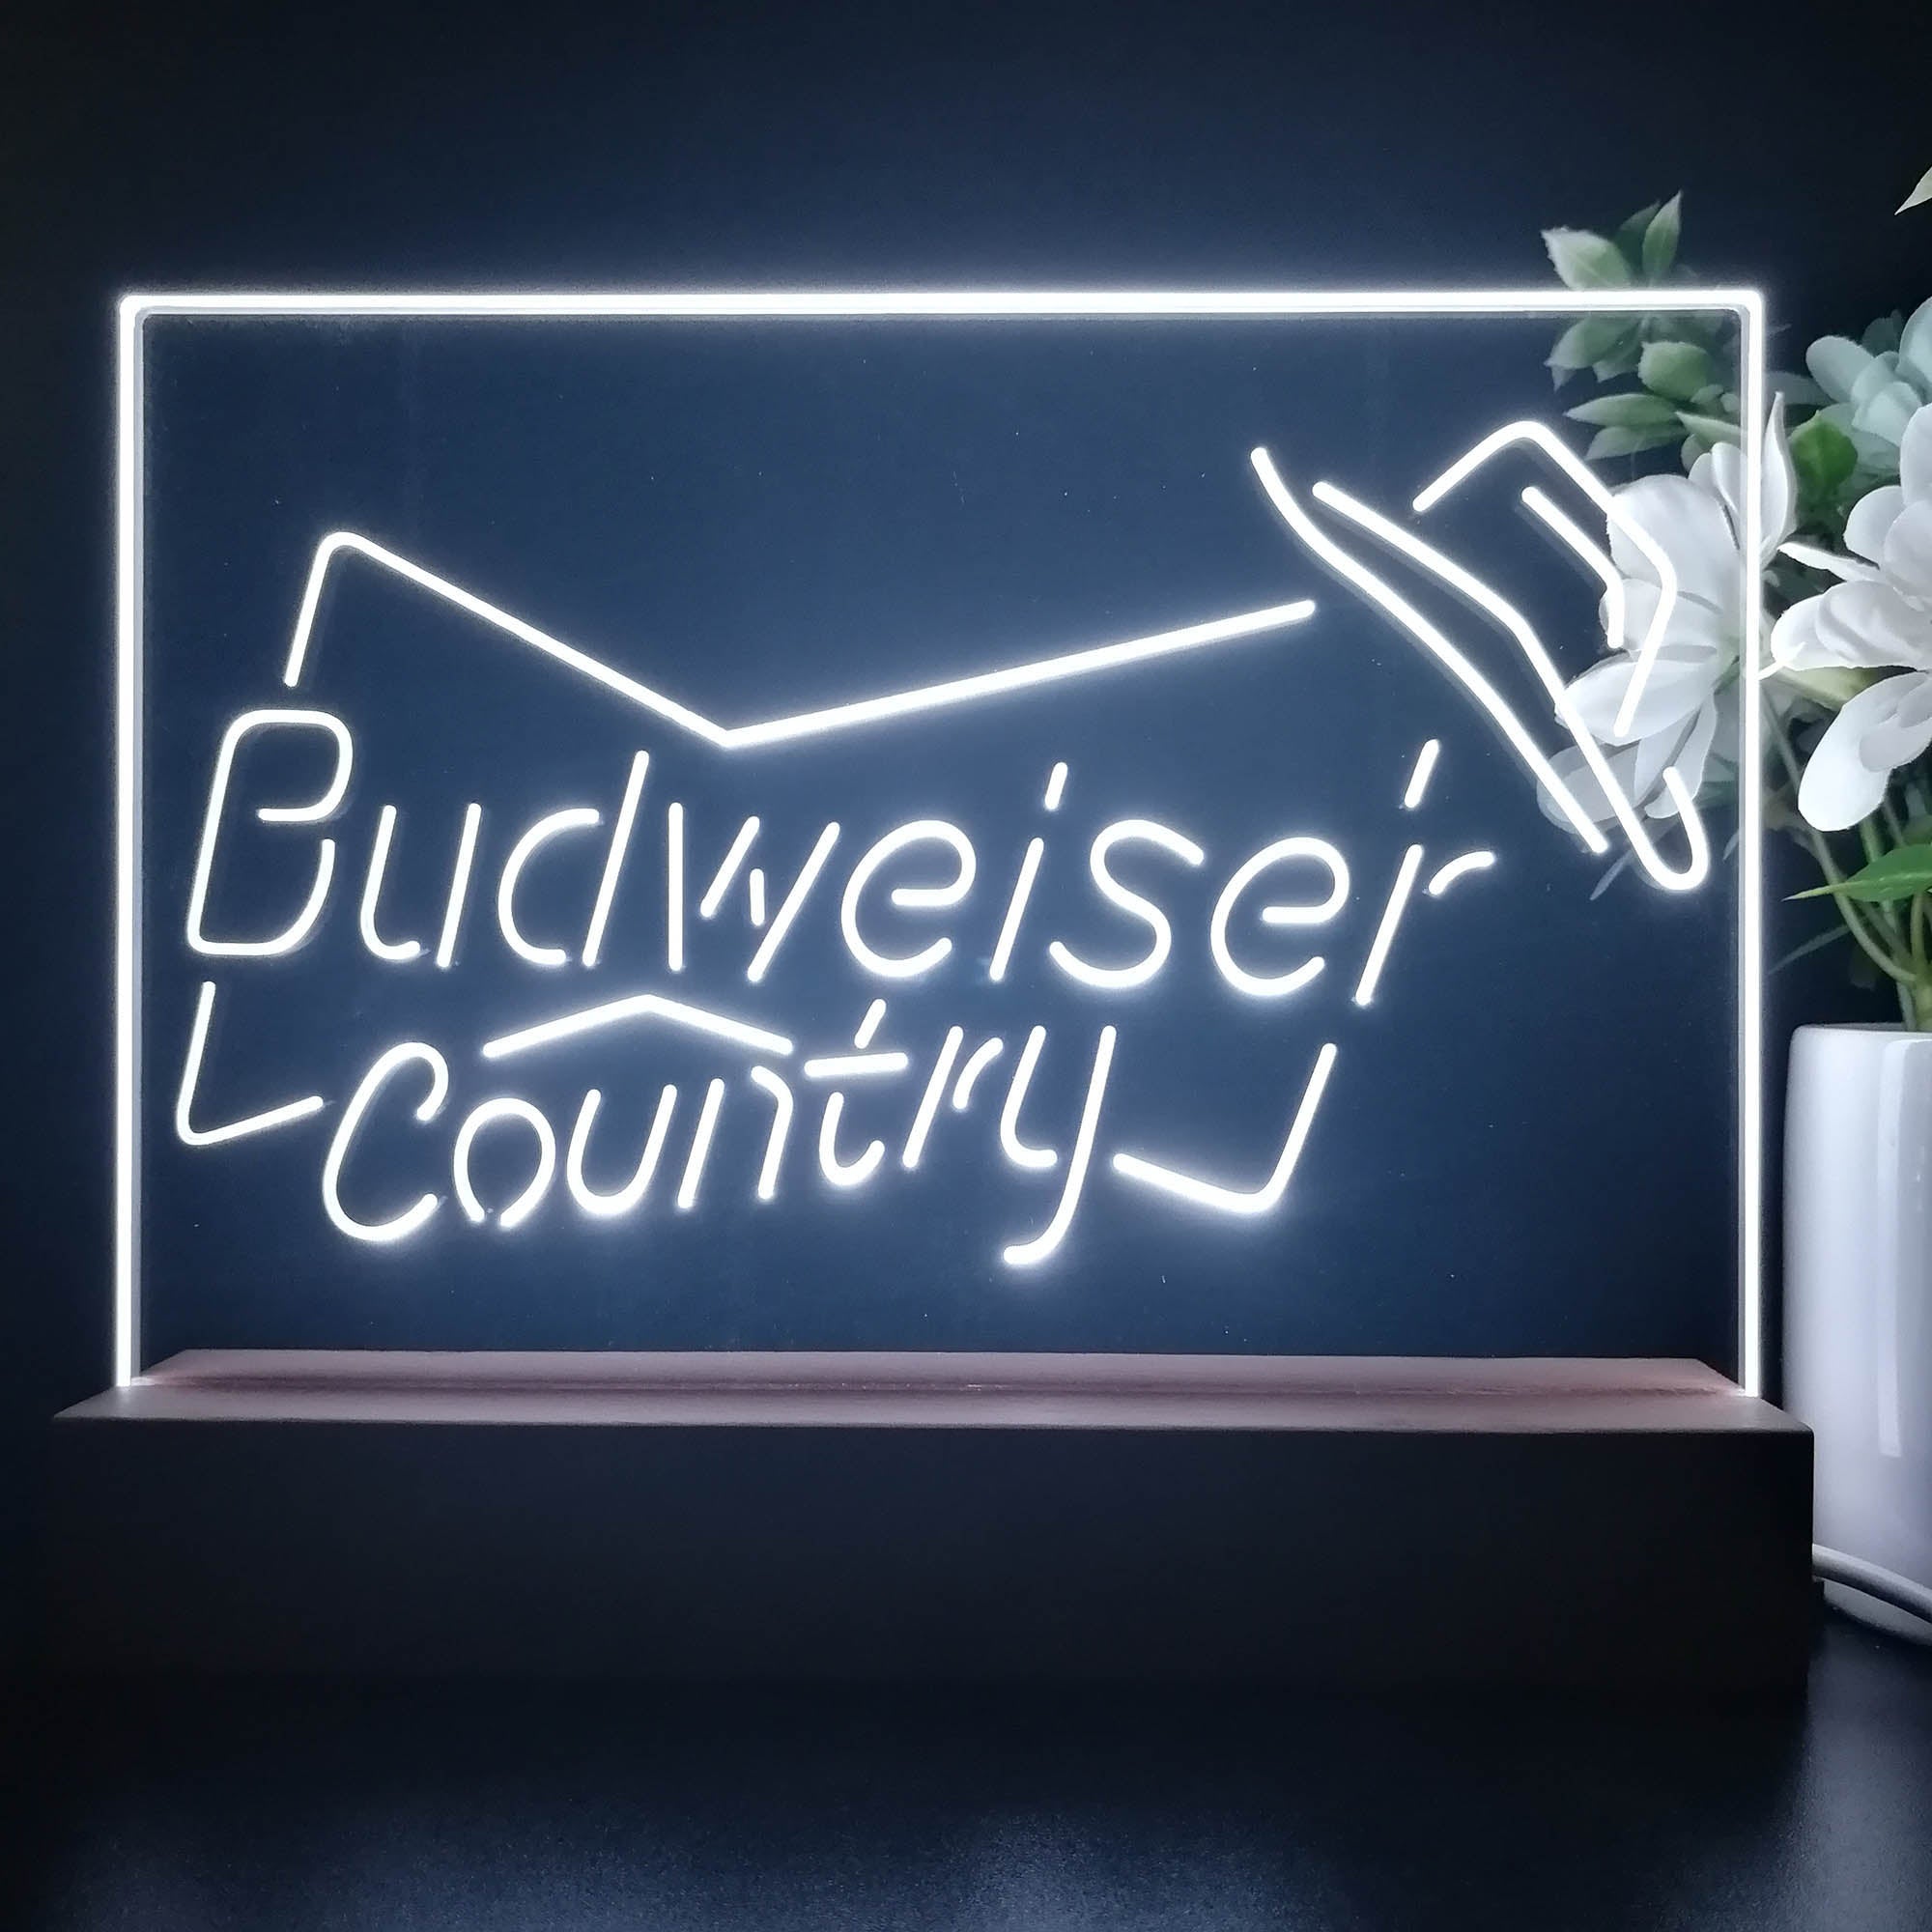 Budweiser Country Cowboys Bowtie Hat Neon Sign Pub Bar Lamp